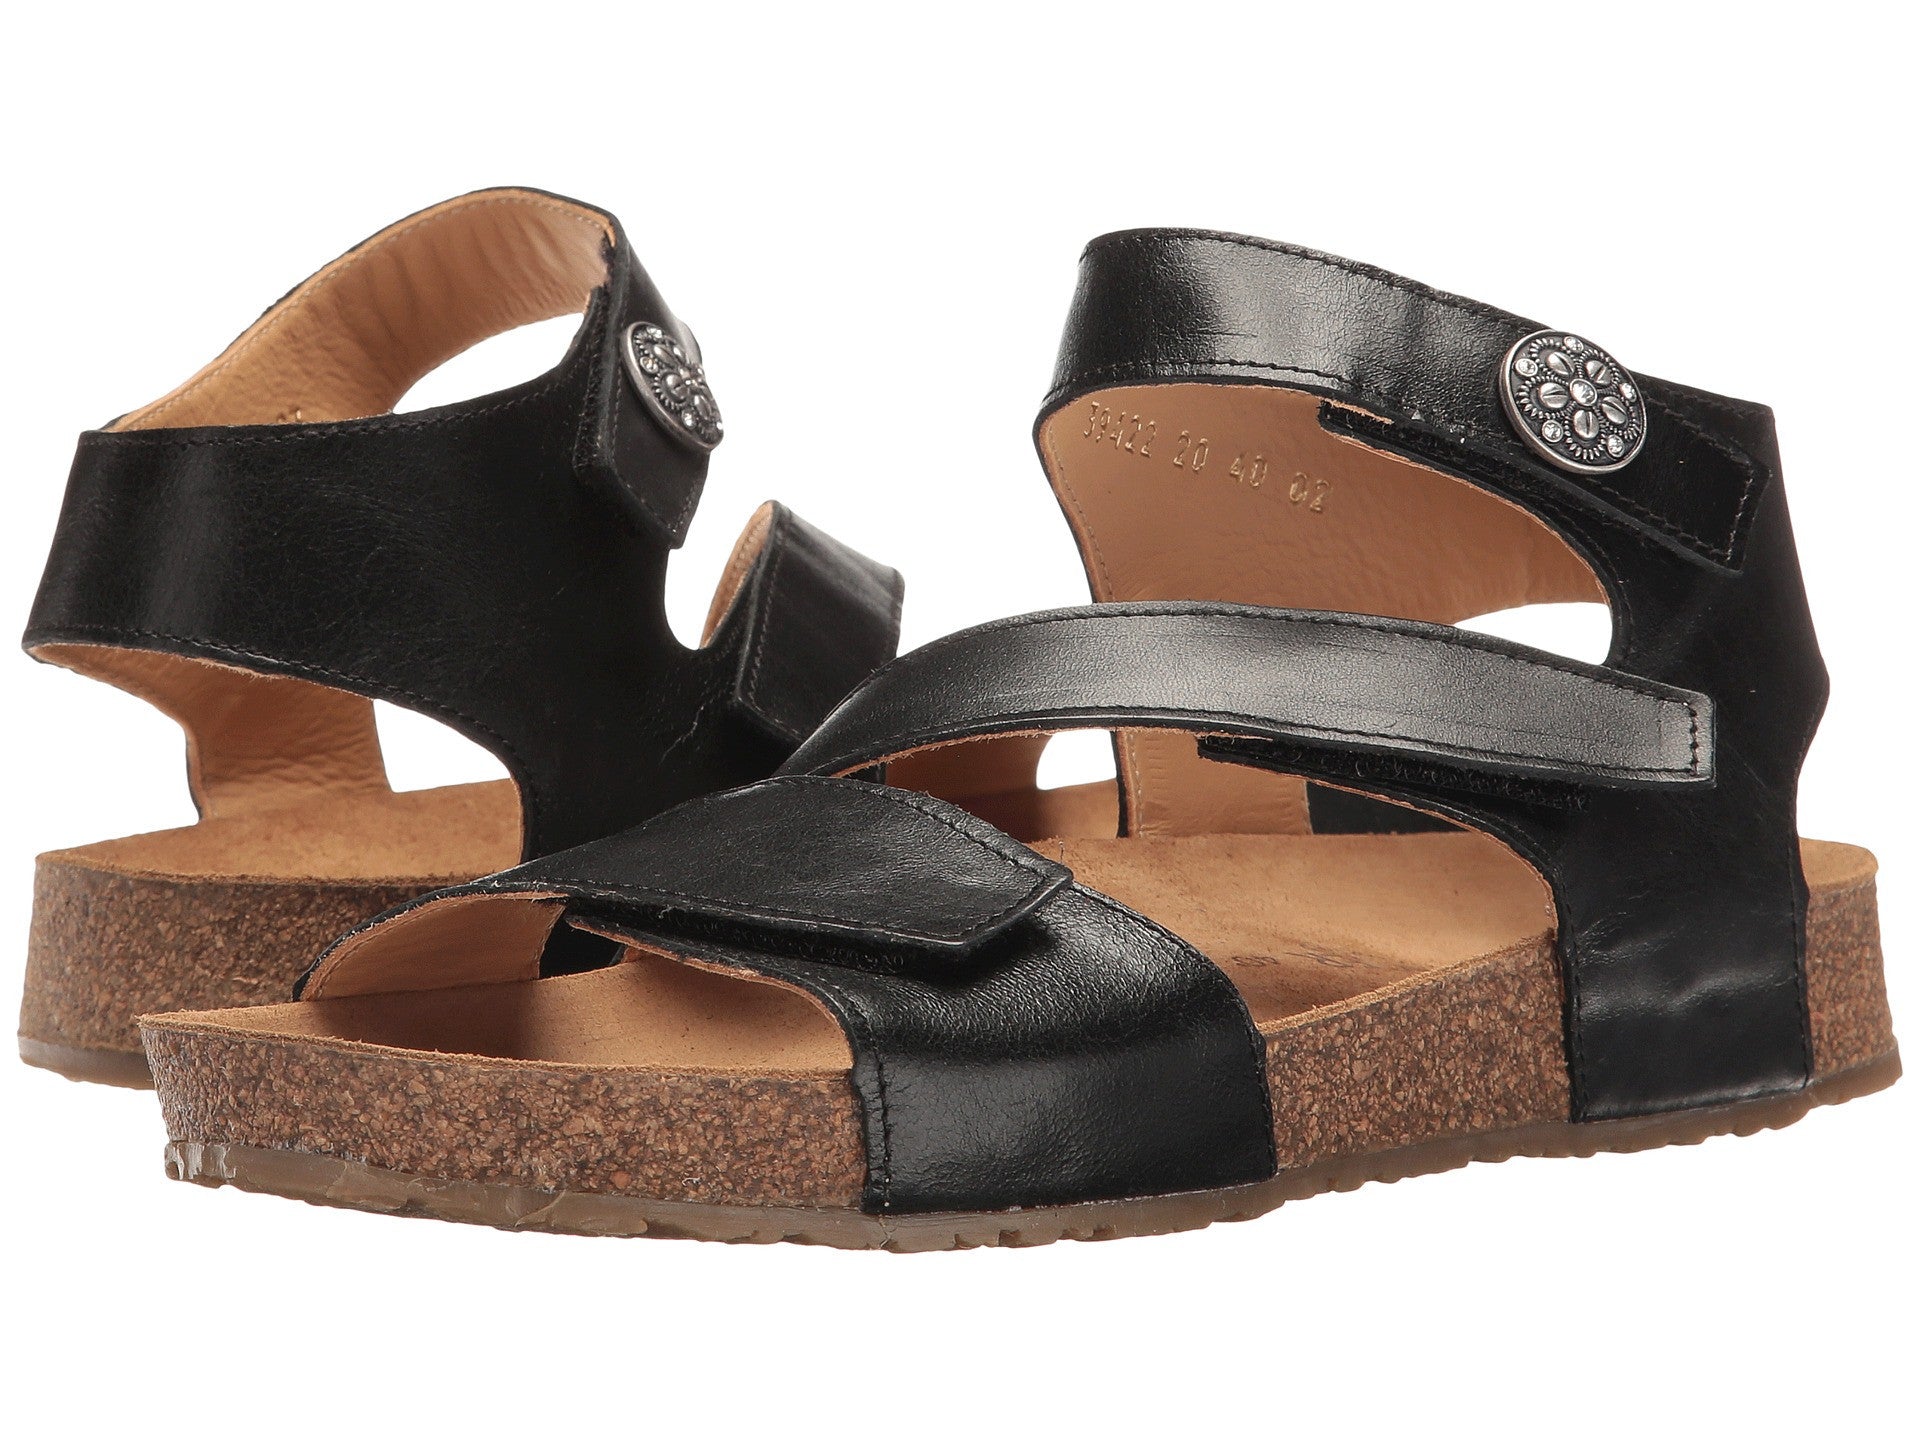 haflinger women's sandals